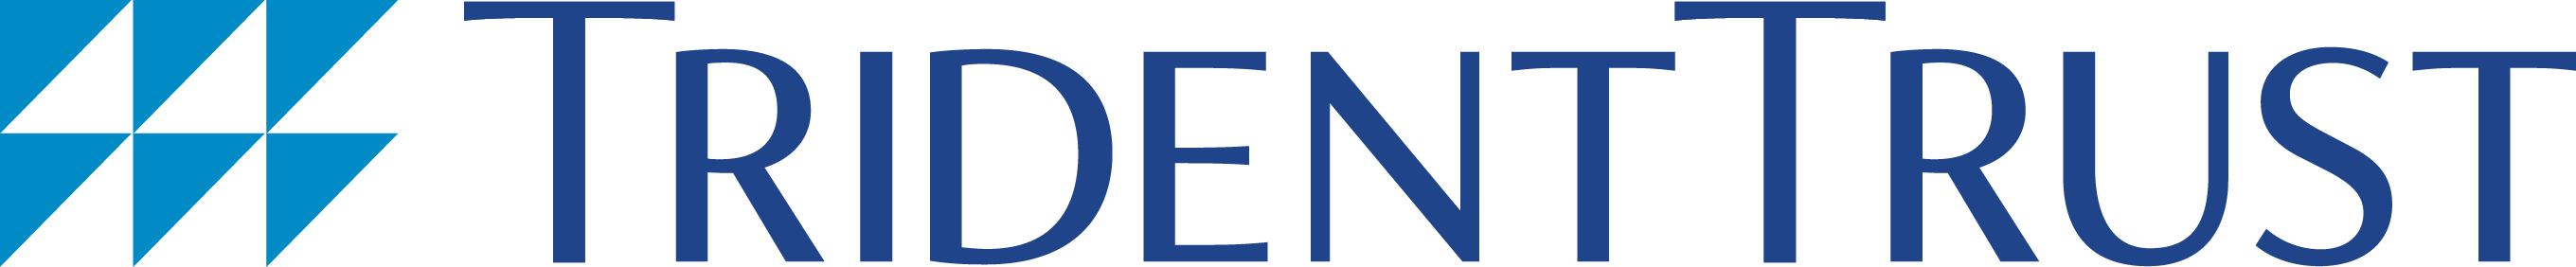 trident-logo-new